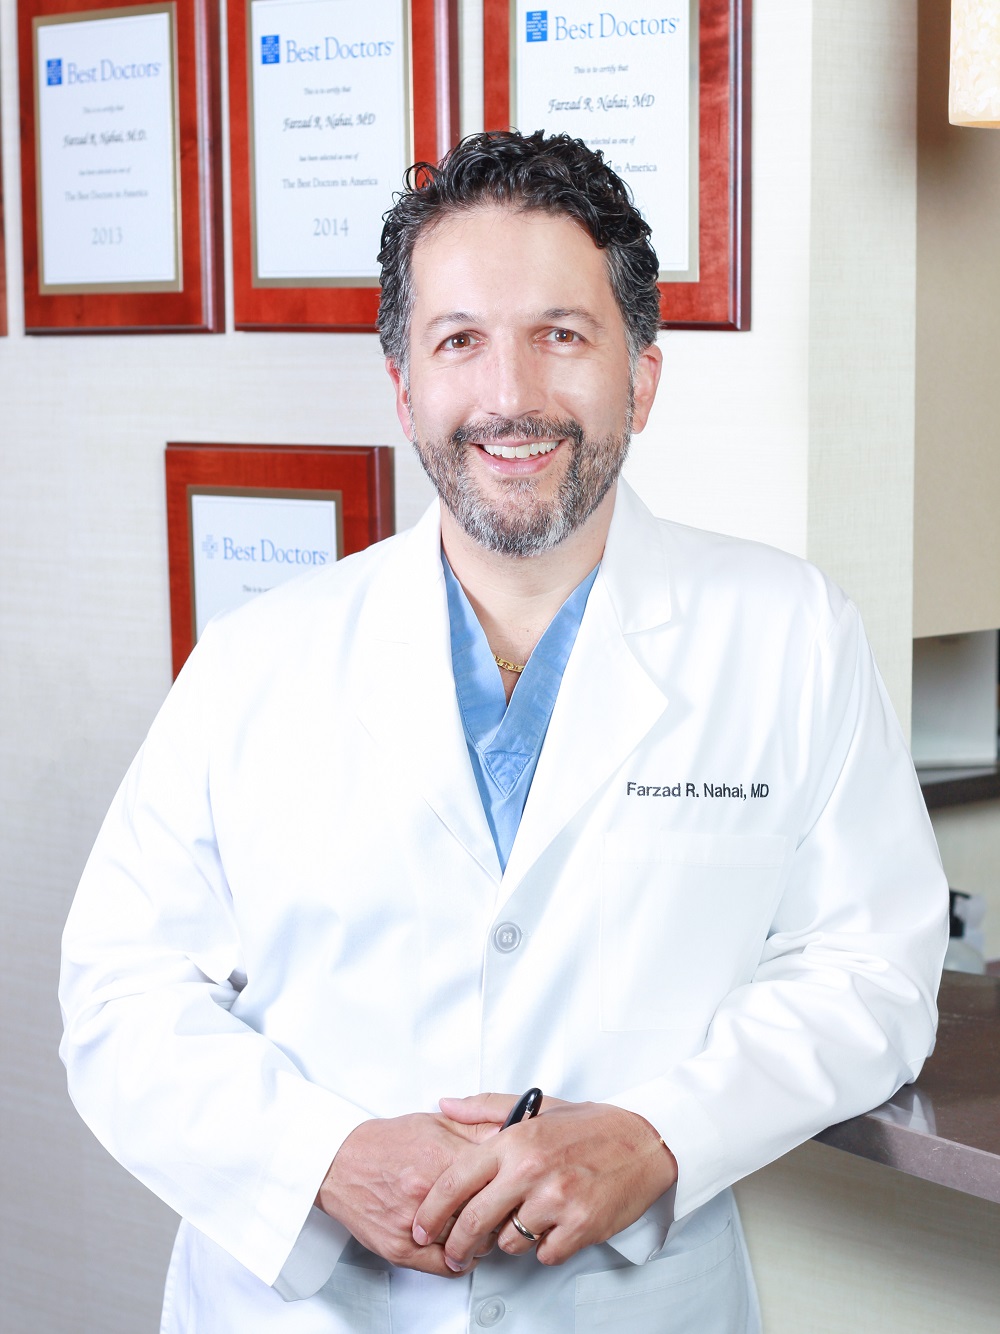 Dr. Farzad R. Nahai is the best rhinoplasty surgeon in Georgia and Atlanta